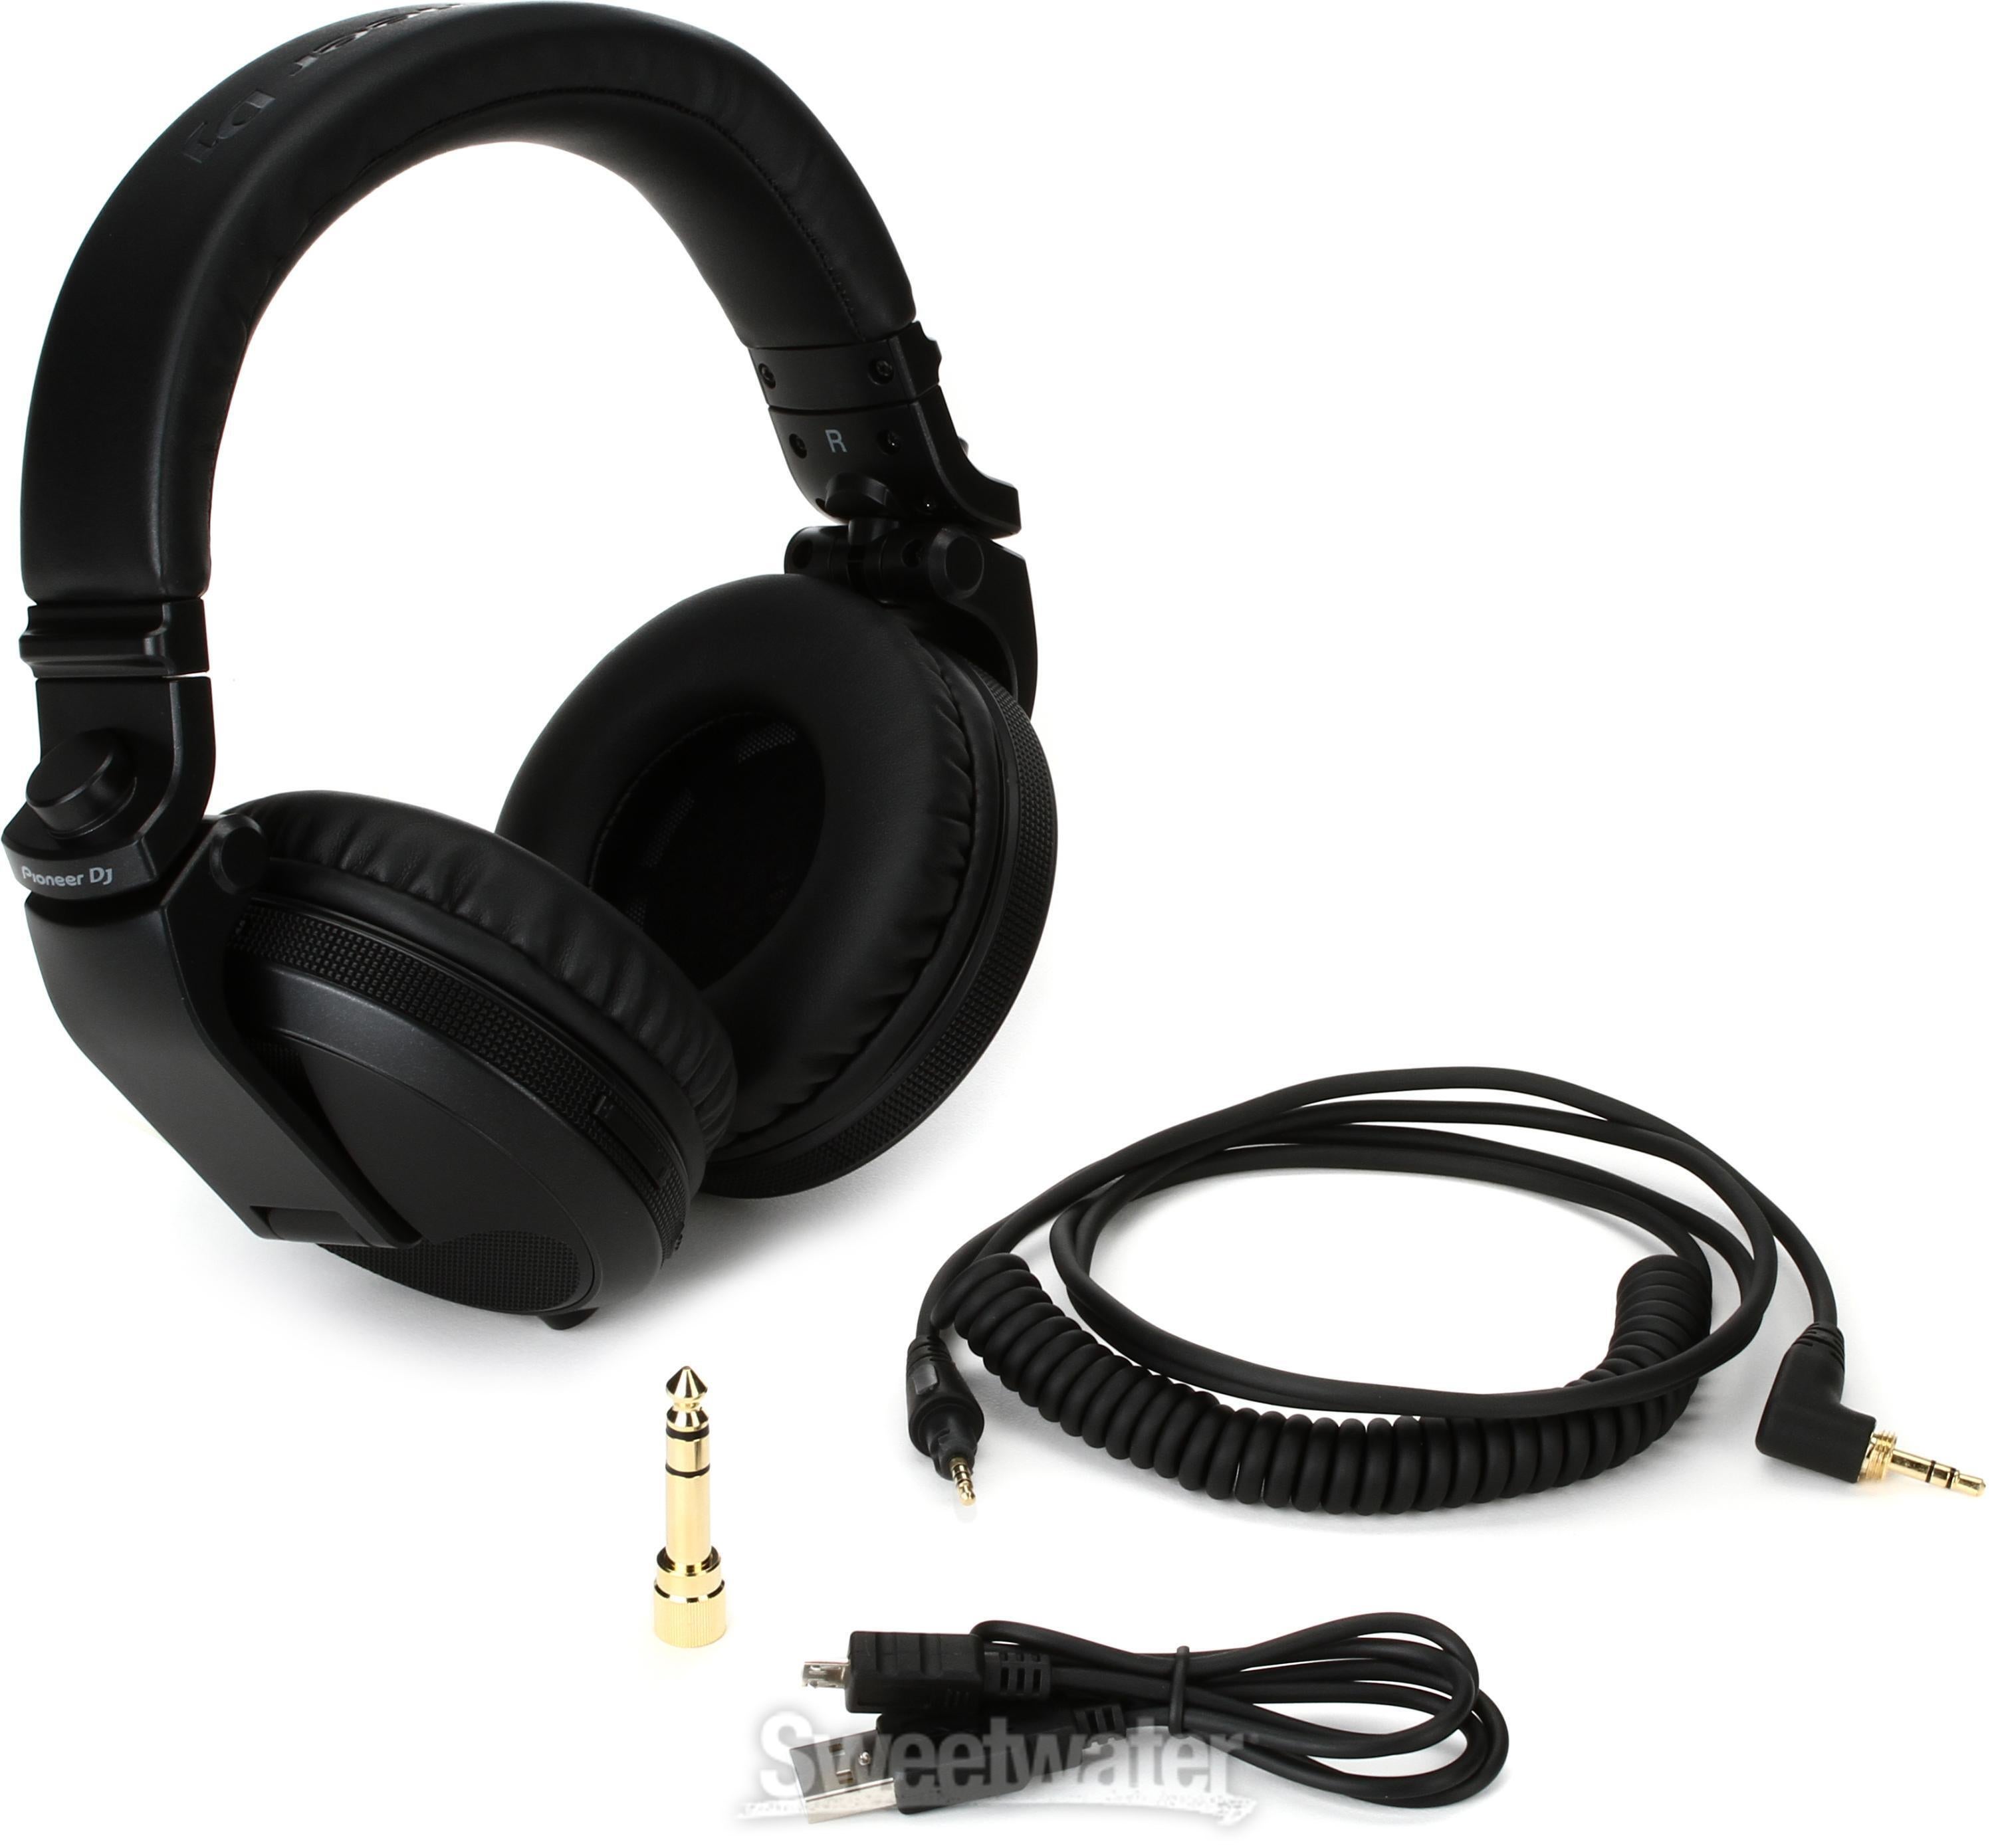 Pioneer DJ HDJ-X5BT Over-Ear DJ Headphones with Bluetooth - Black